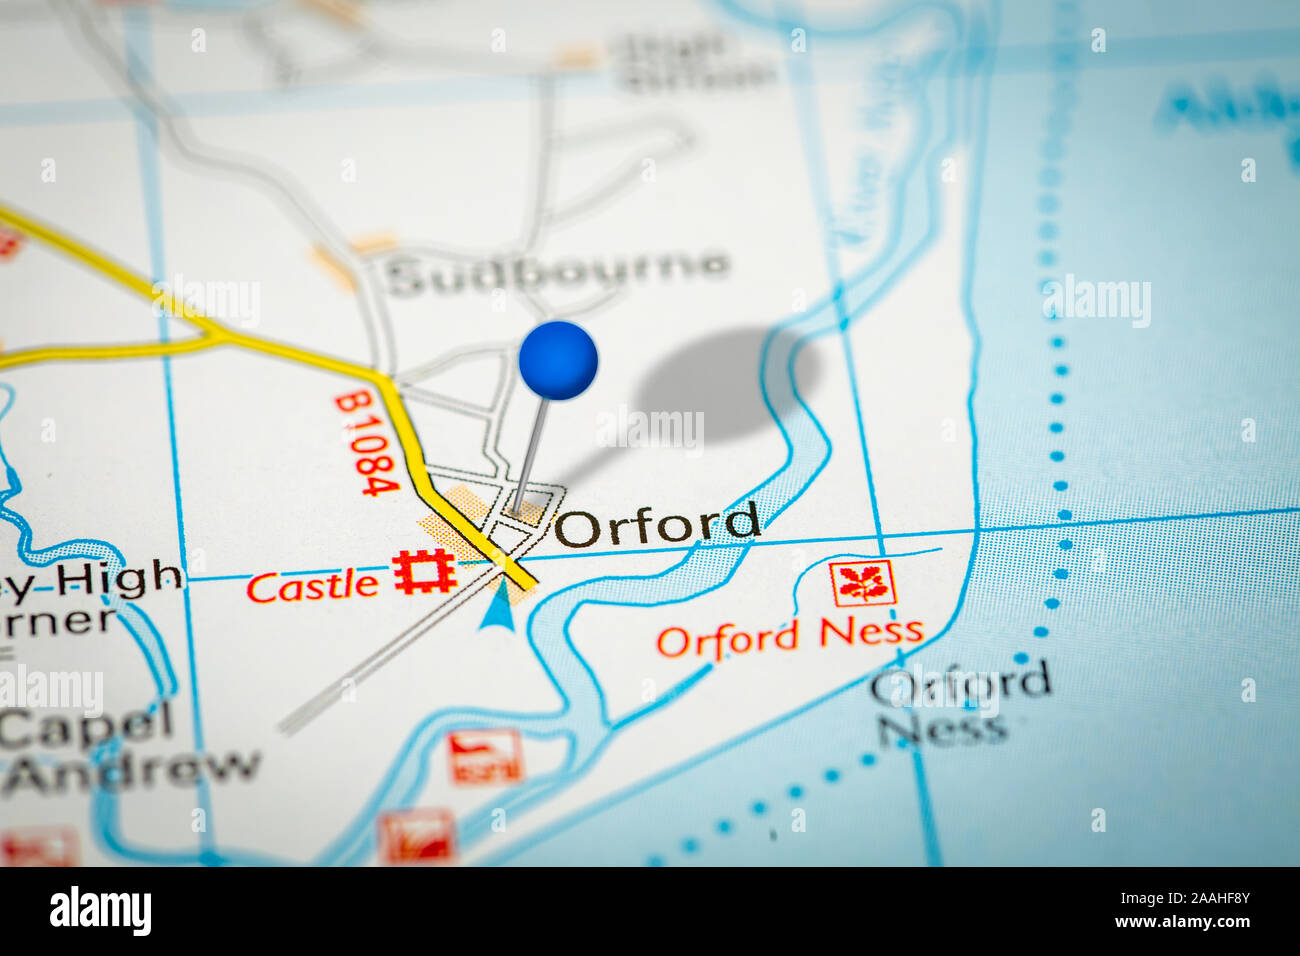 Mappa blu pin su carta mappa mostrando Orford Foto Stock